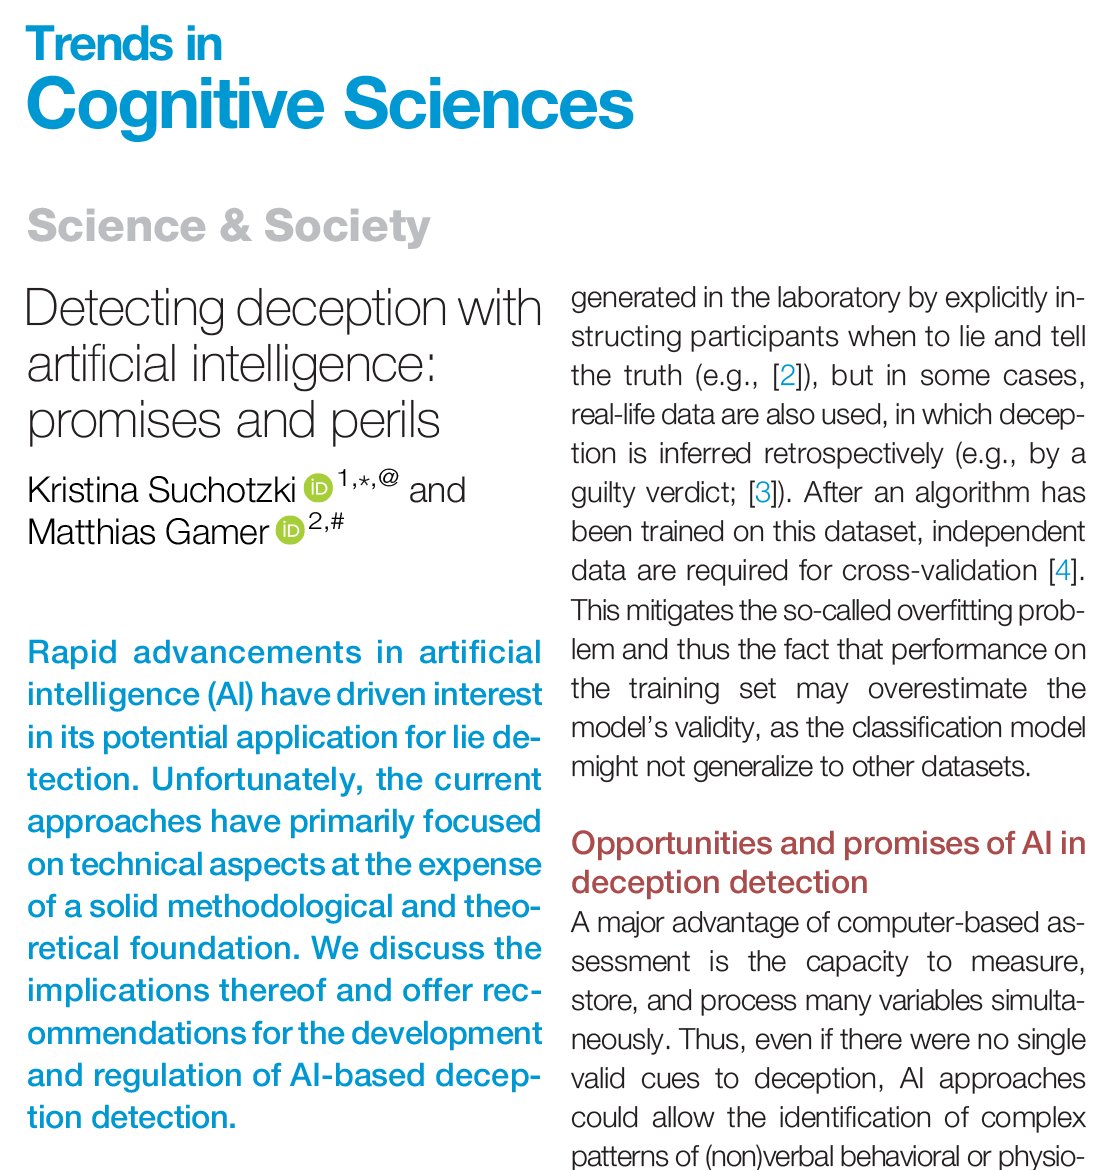 Detecting deception with artificial intelligence: promises and perils Science & Society by Kristina Suchotzki (@KSuchotzki) & Matthias Gamer doi.org/10.1016/j.tics…